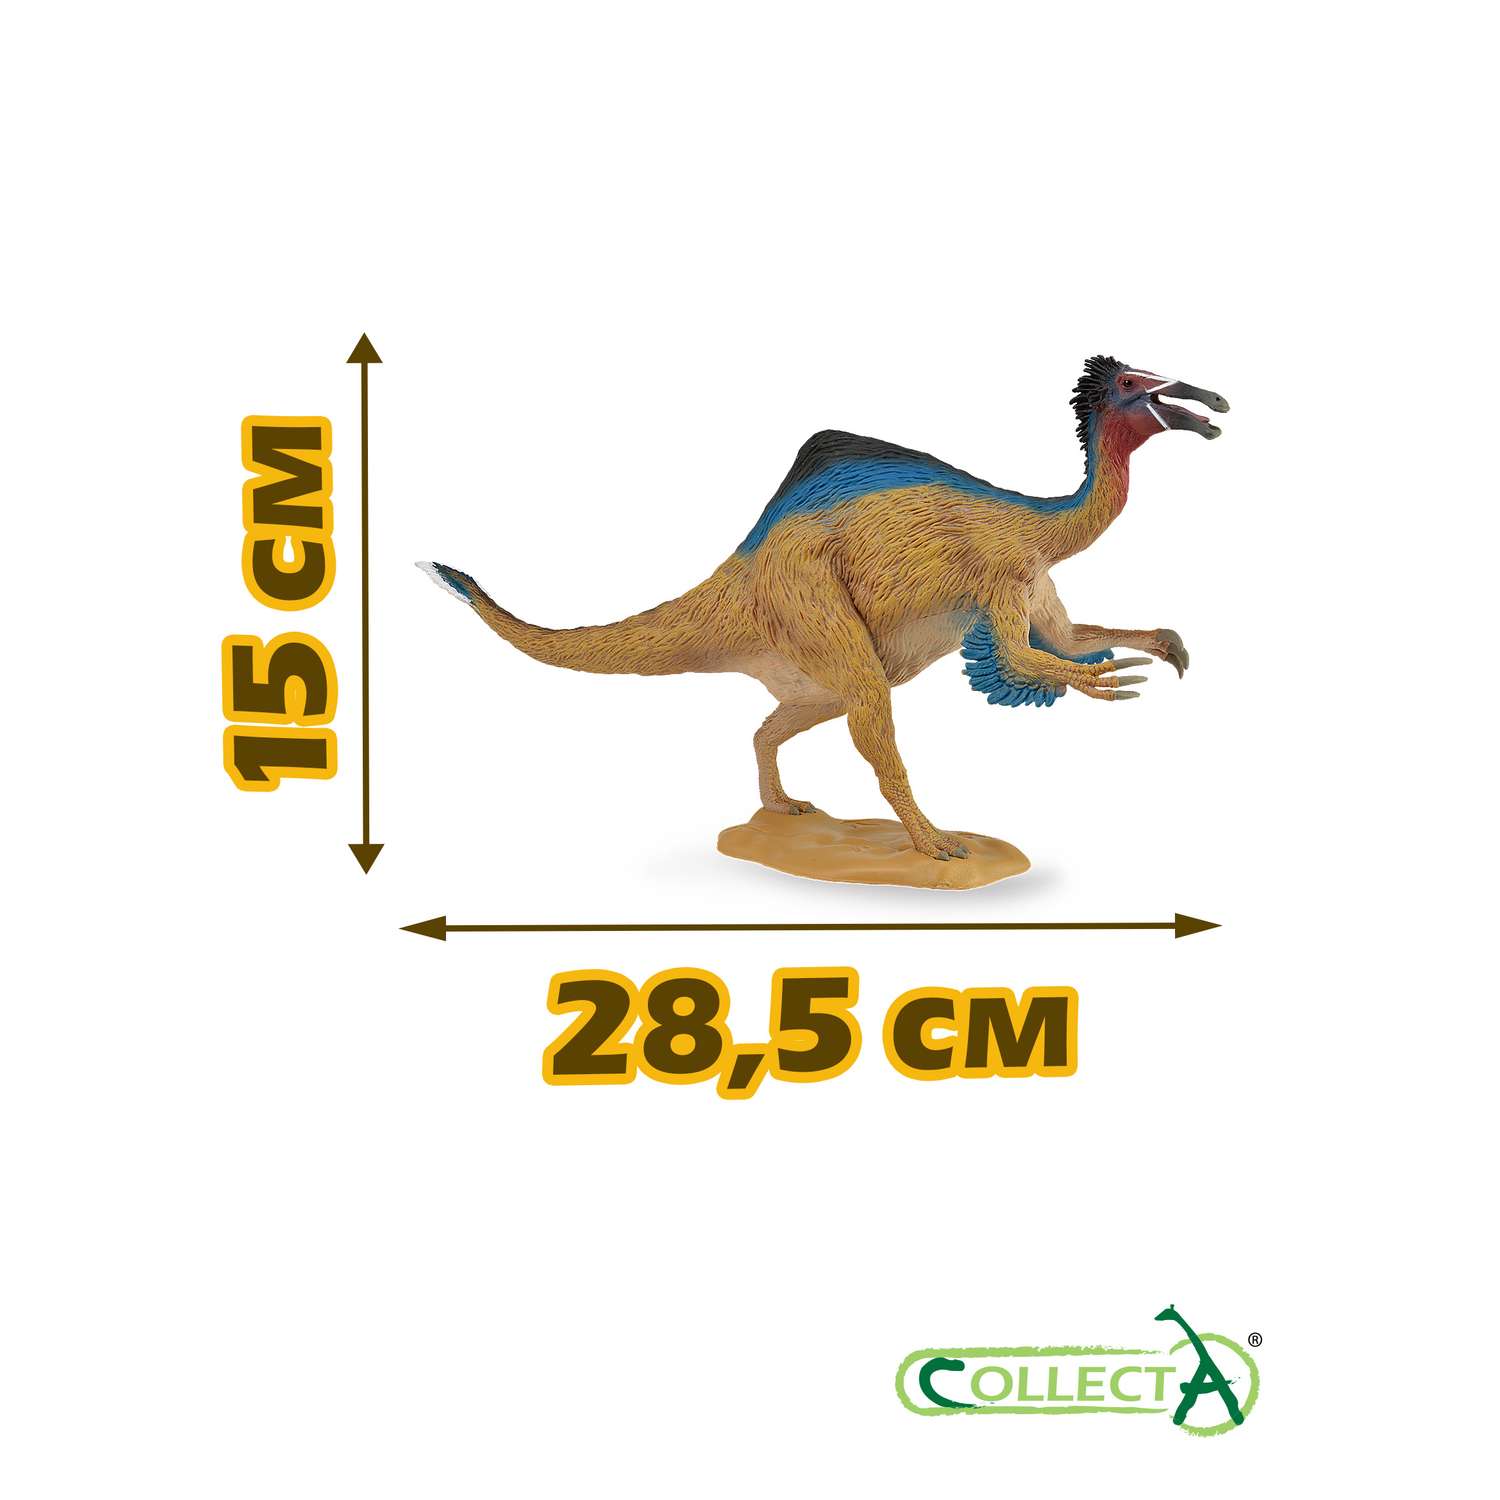 Игрушка Collecta Дейнохейрус 1:40 фигурка динозавра - фото 2